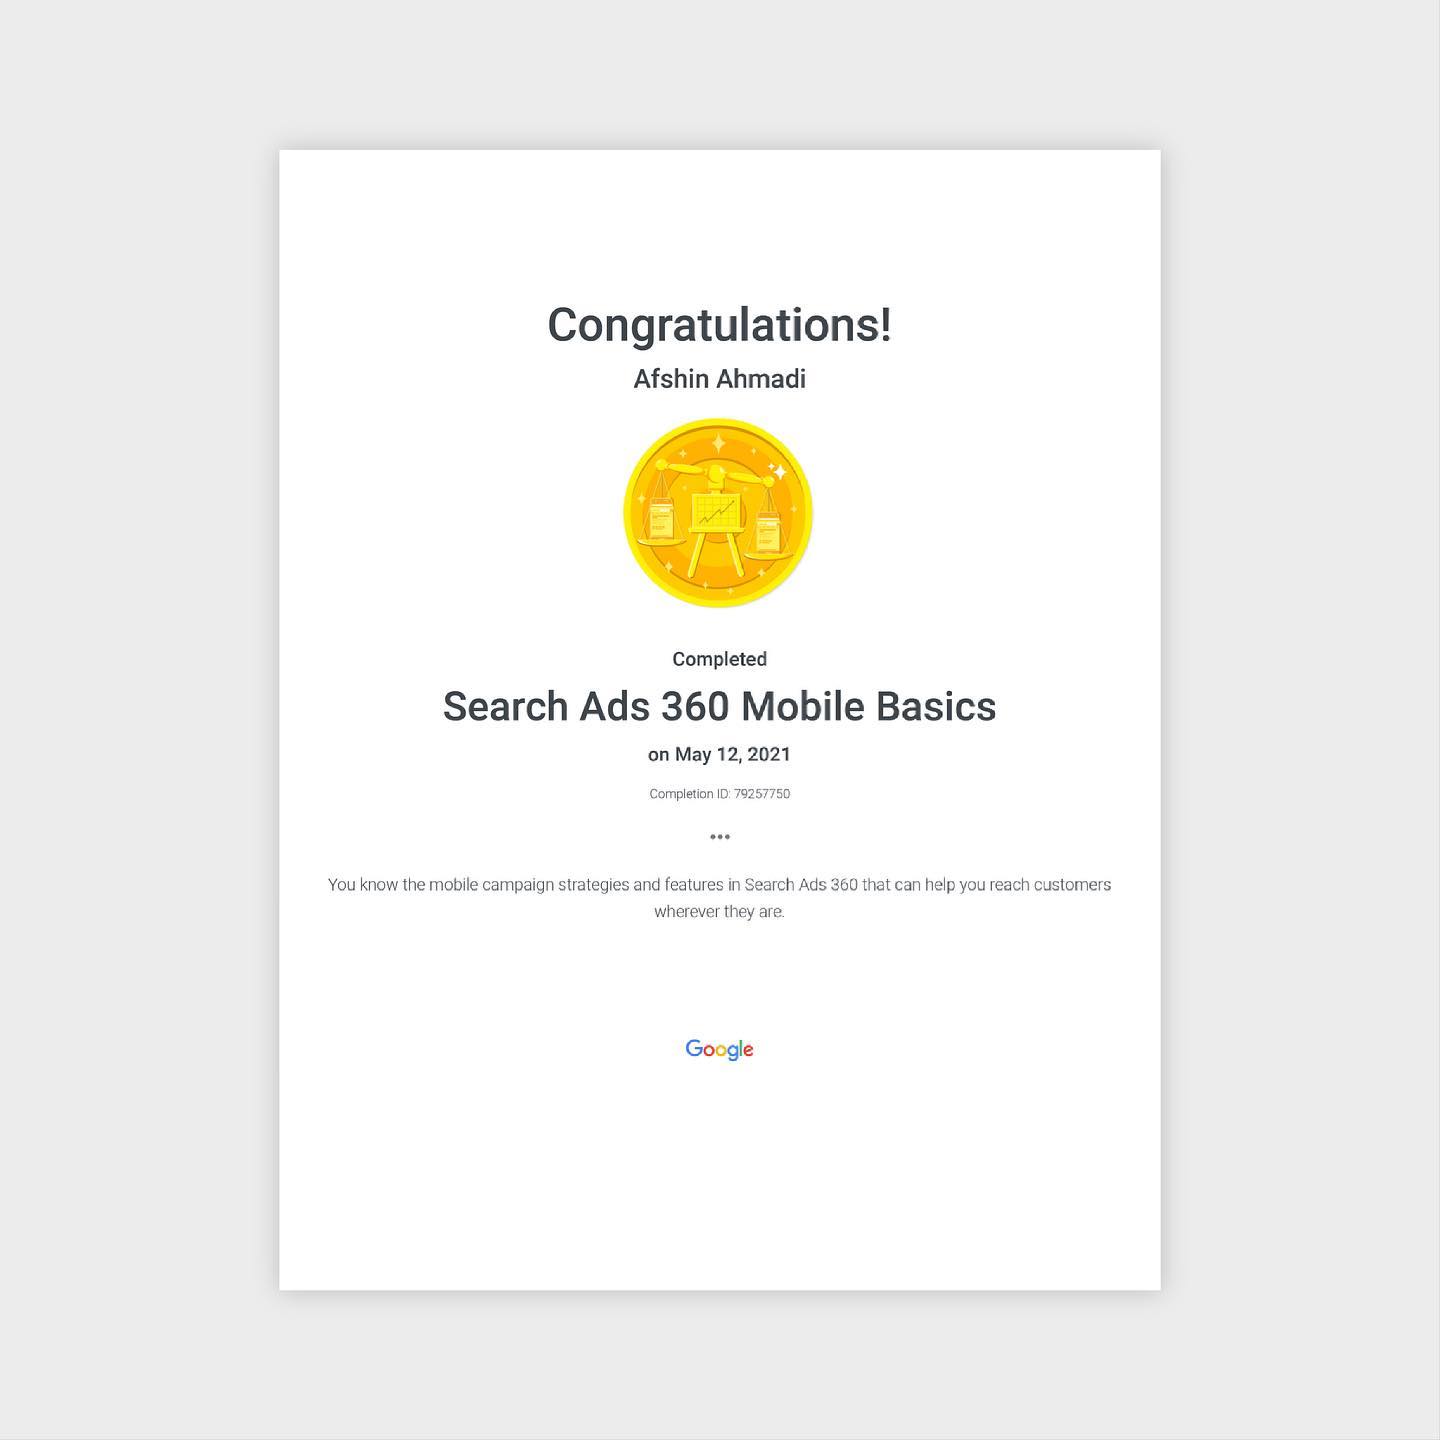 Search Ads 360 Mobile